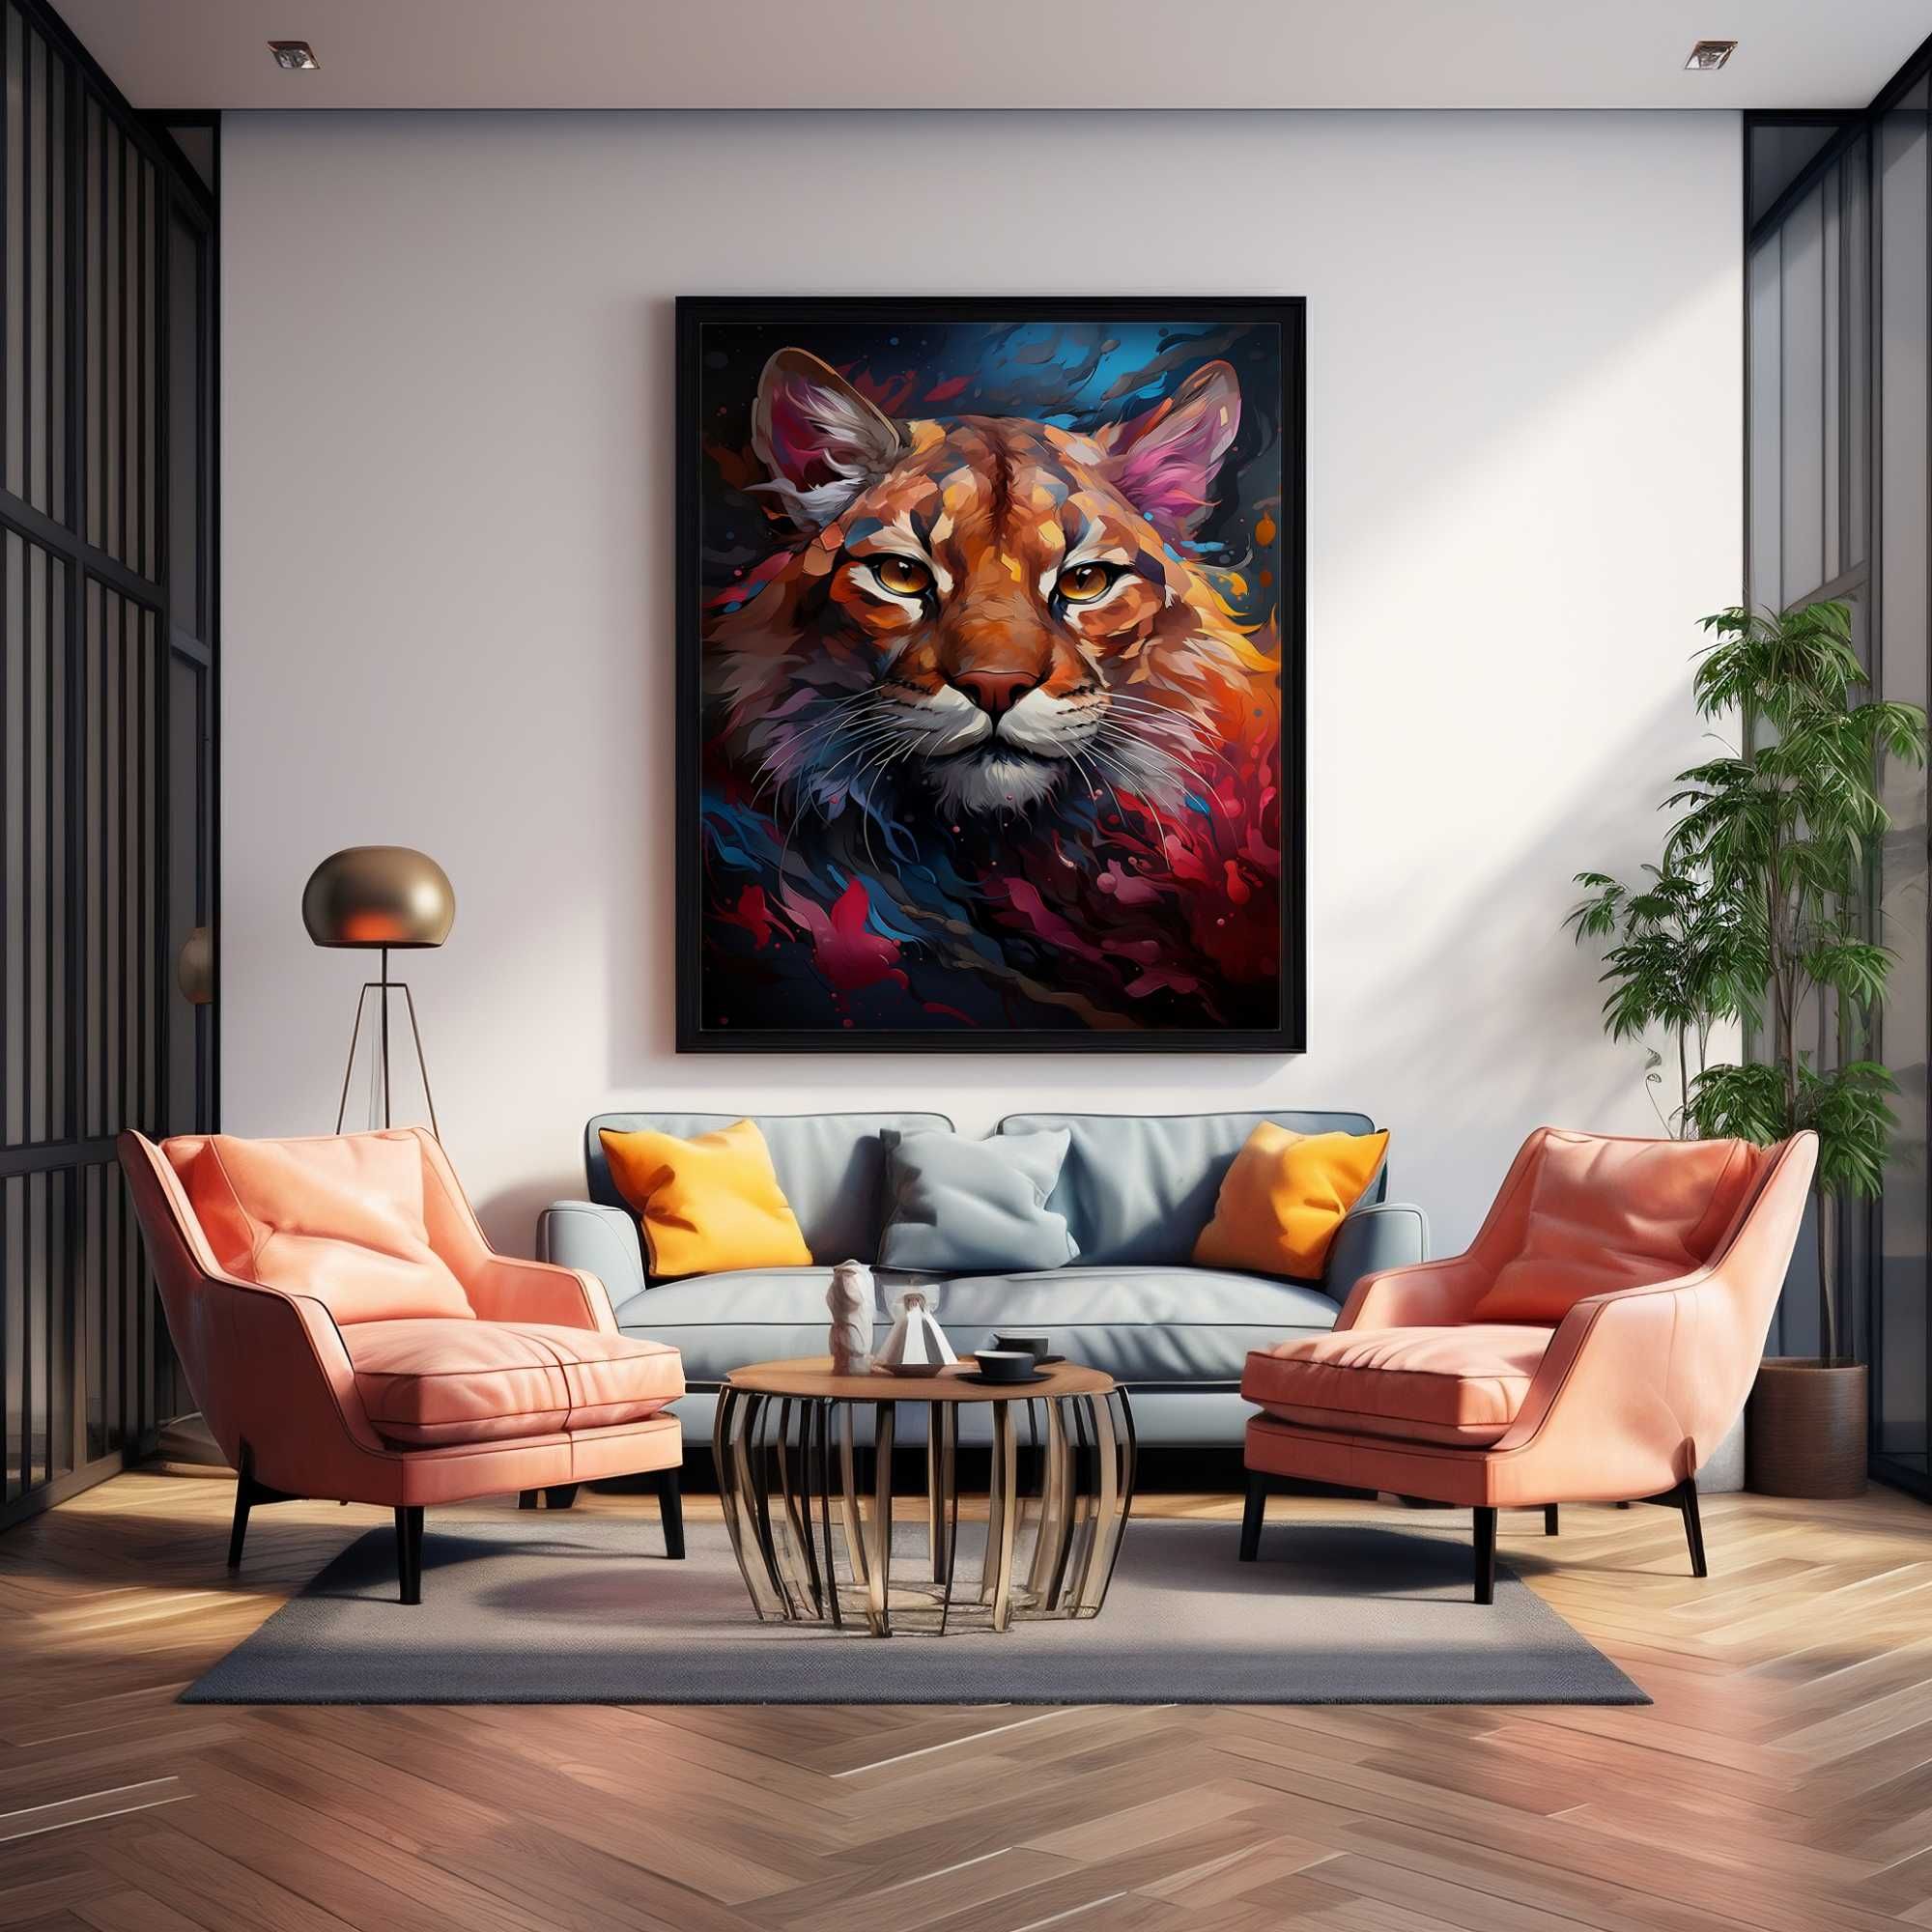 Plakat na Ścianę Obraz Tygrys Abstrakcja Kolory 50x70 cm Premium